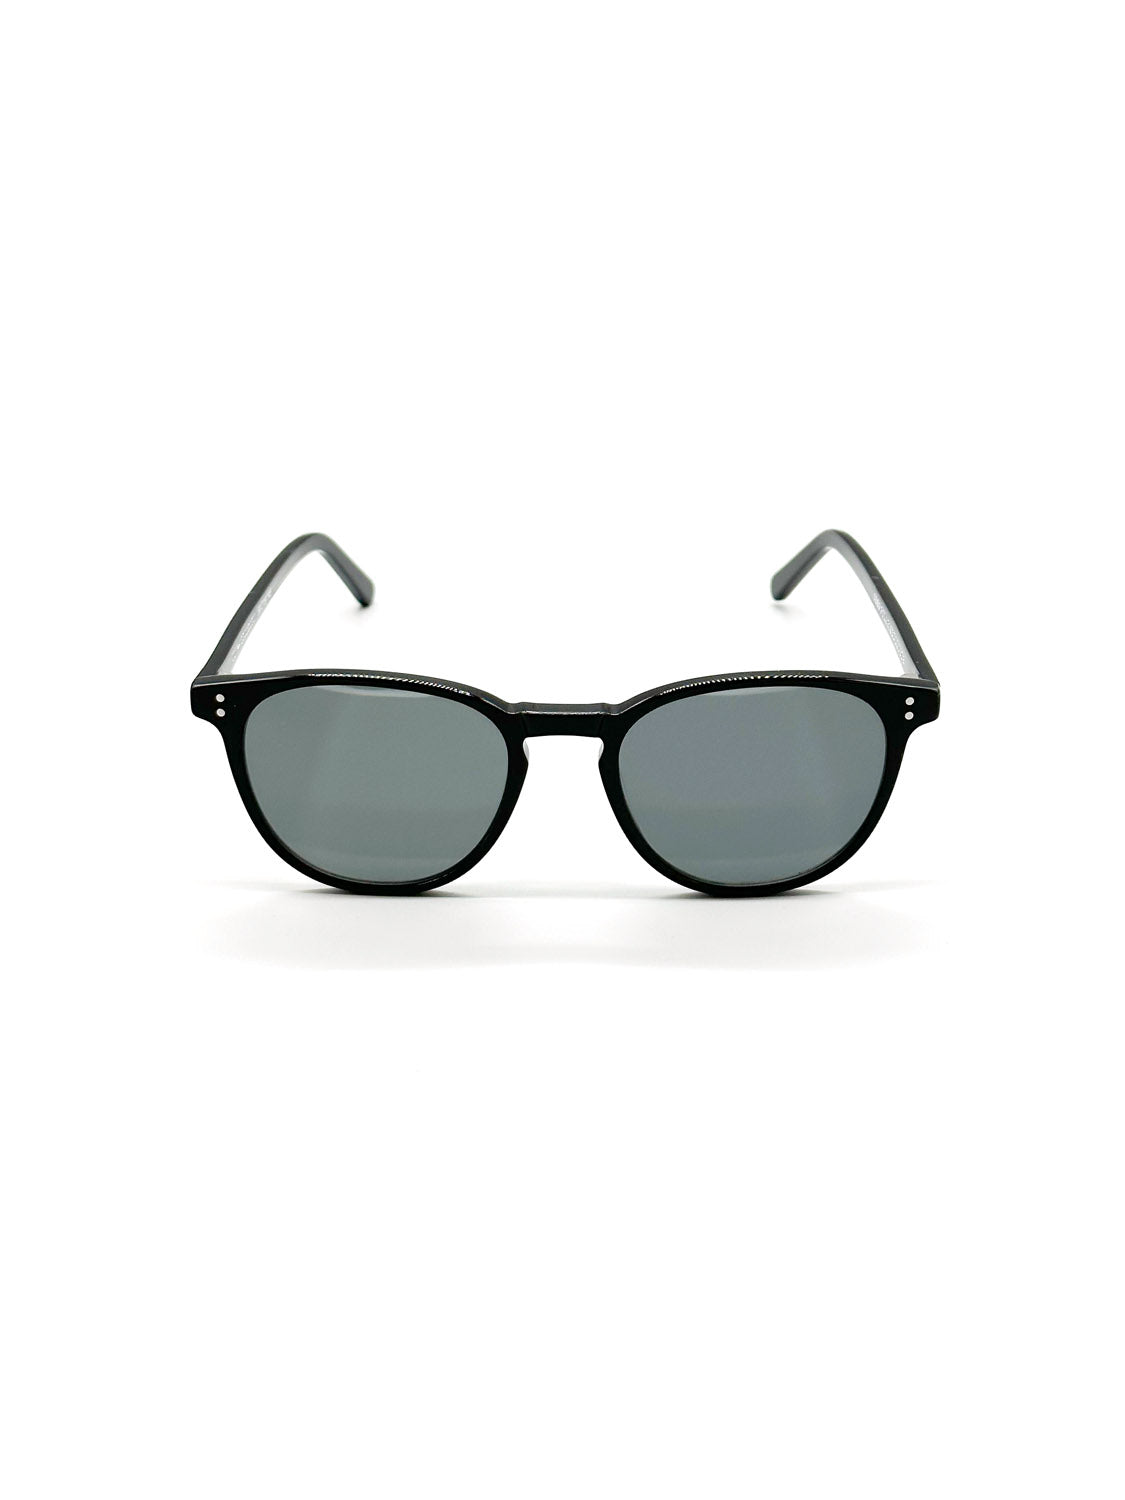 A001G - ID polarized sunglasses